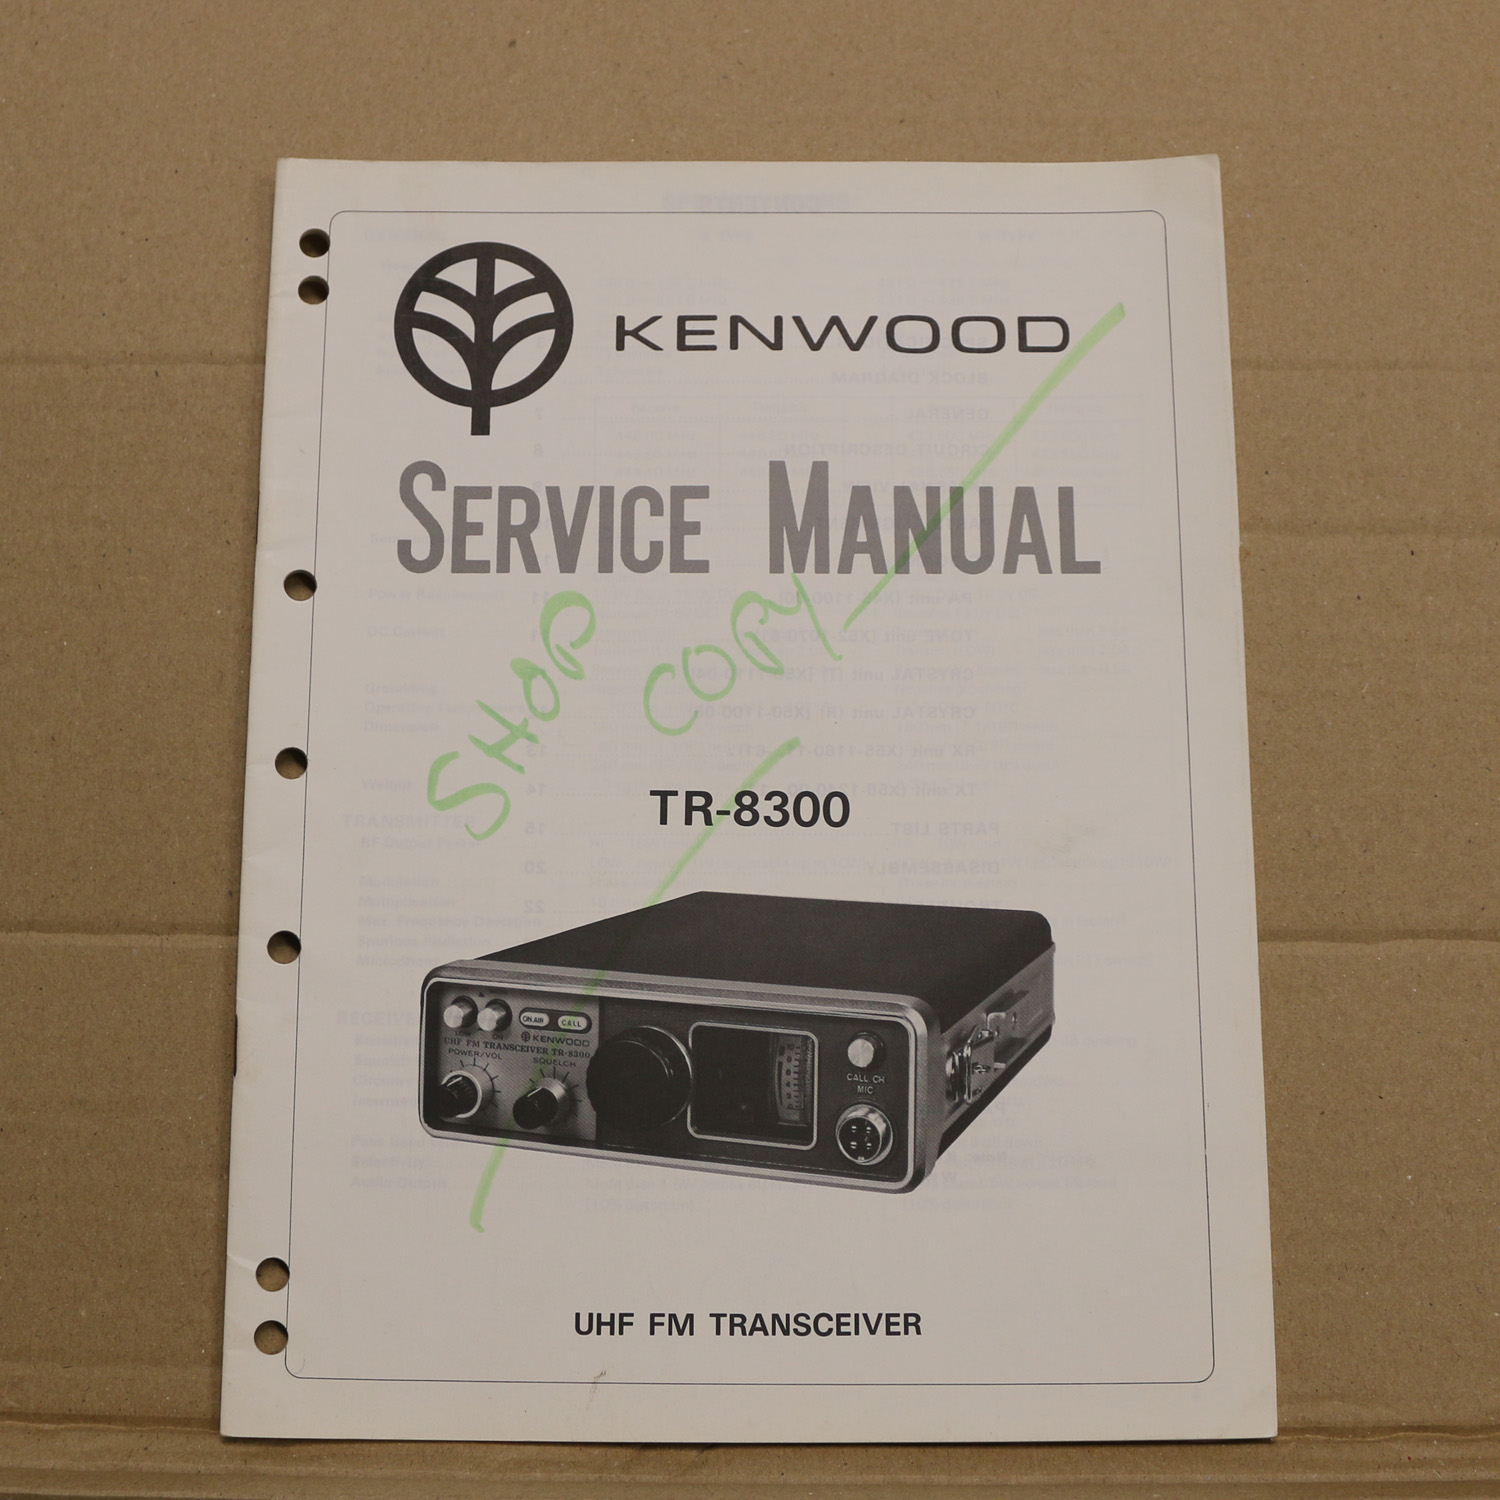 Kenwood TR-8300 Service Manual